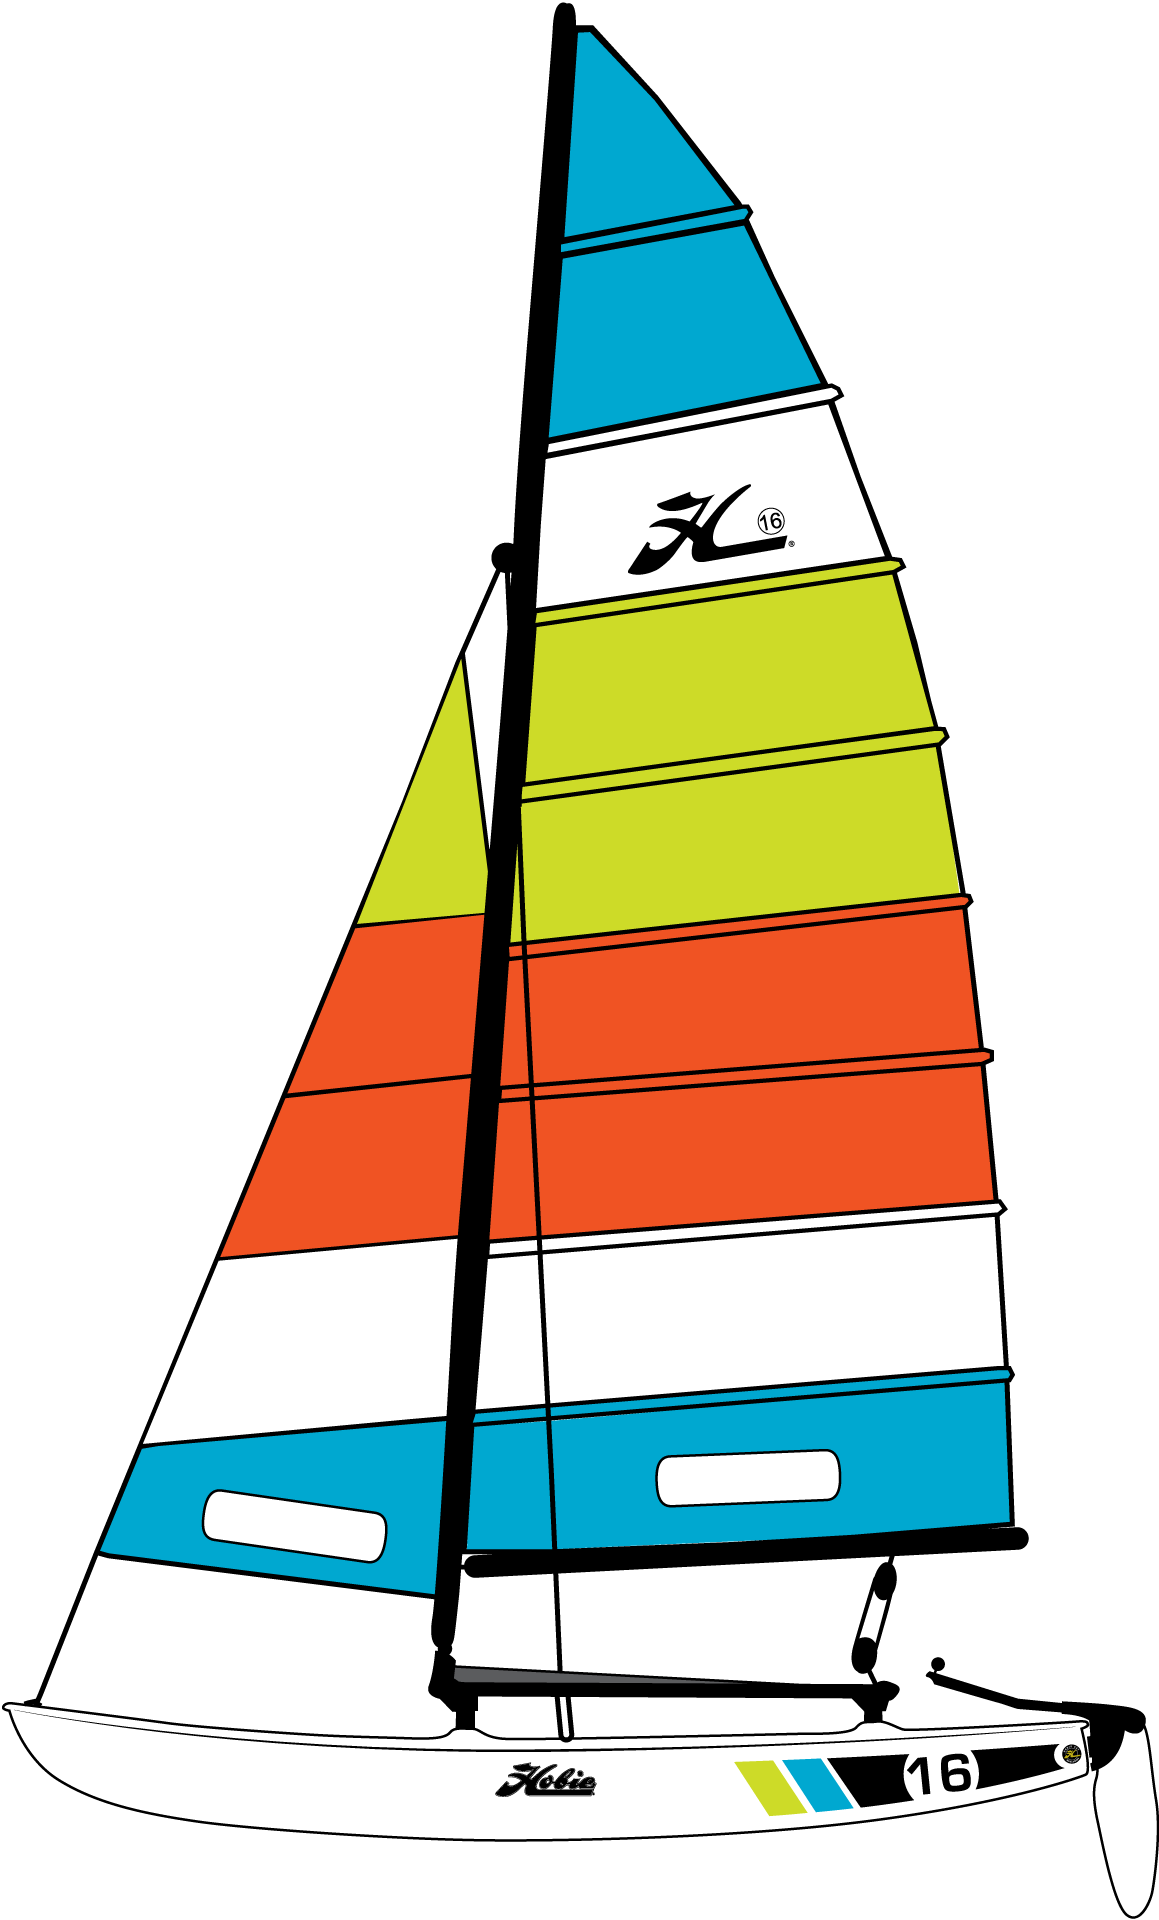 Sailor clipart sailing. Hobie catamaran fiberglass sailboats